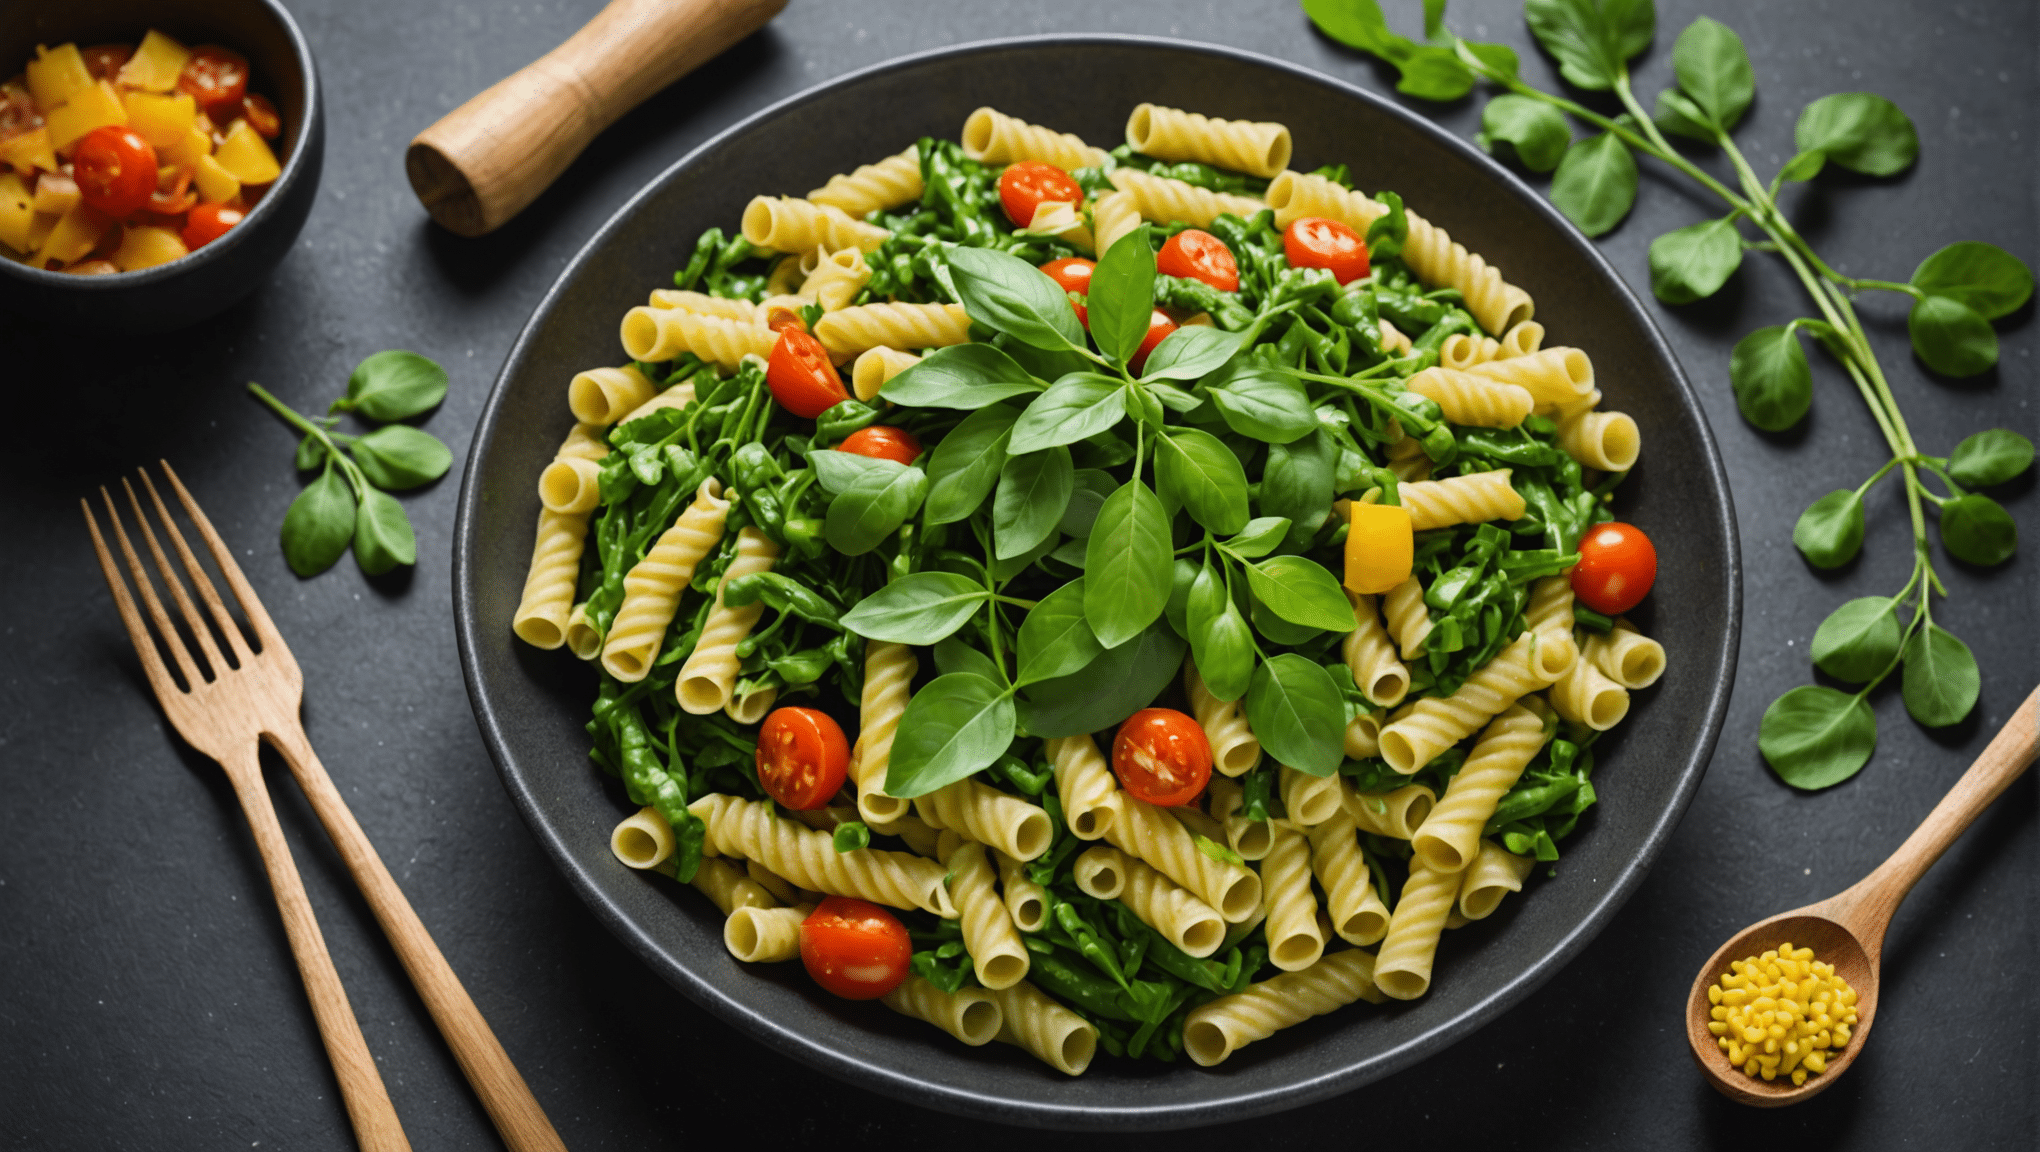 Moringa Leaf and Vegetable Pasta